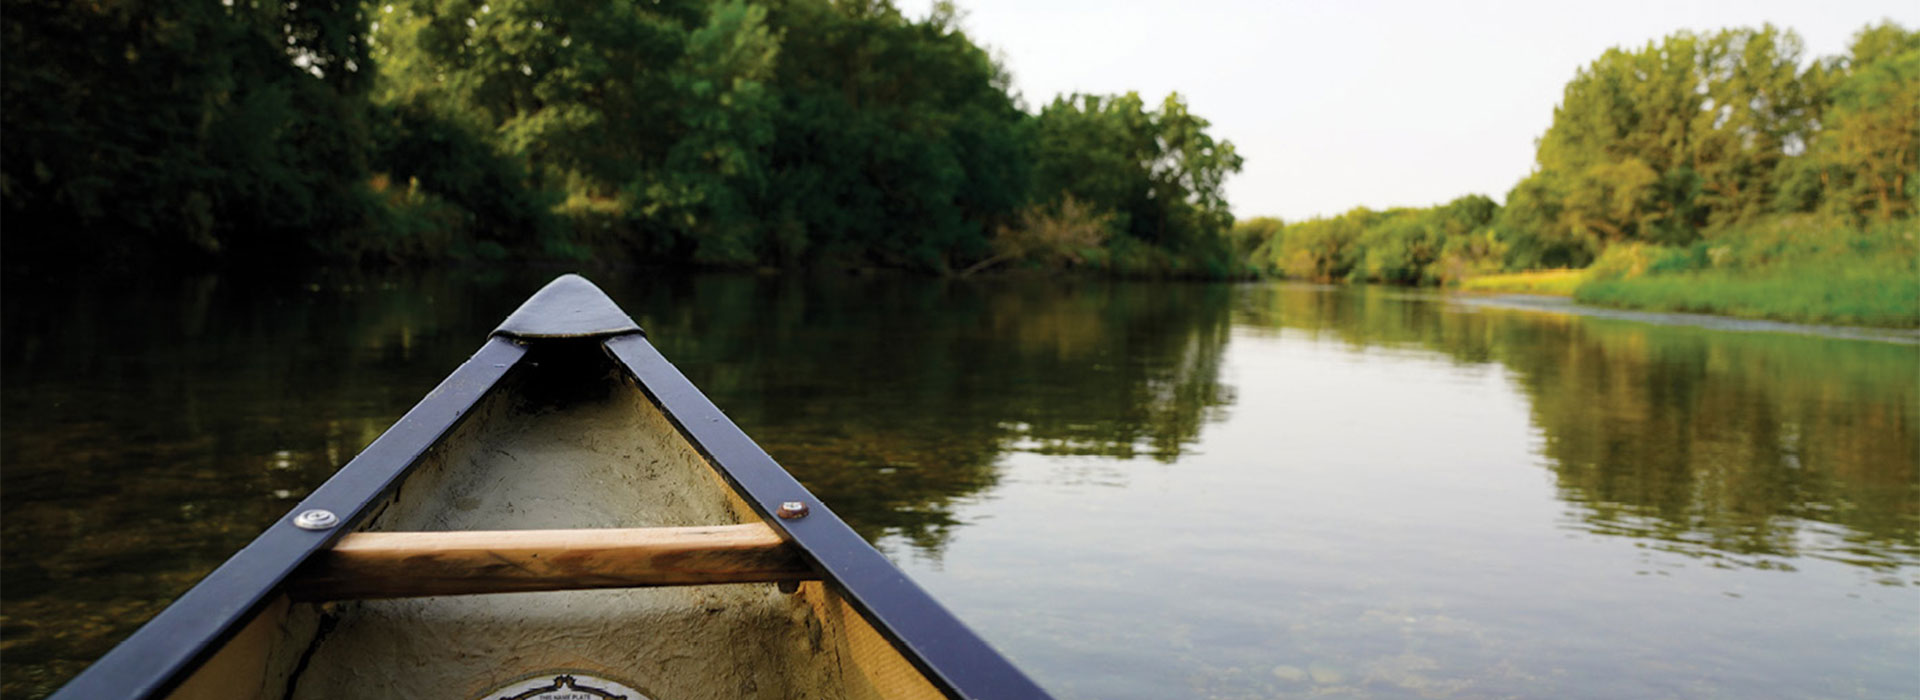 Canoe on a river